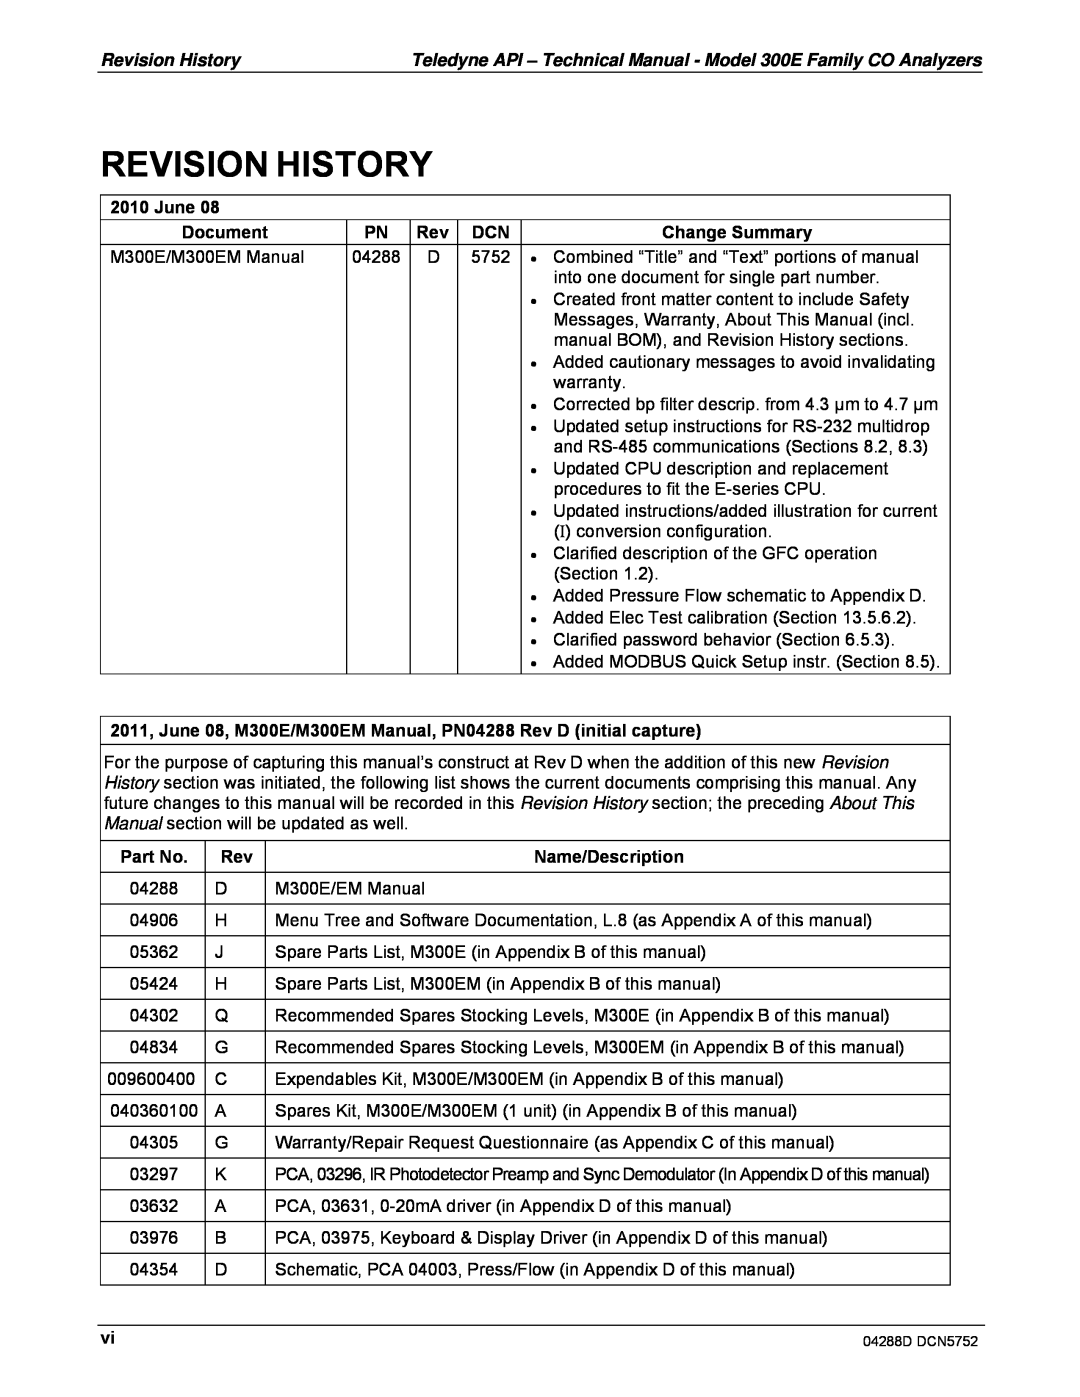 Teledyne M300EM operation manual Revision History, June, Document, Change Summary, Part No, Name/Description 